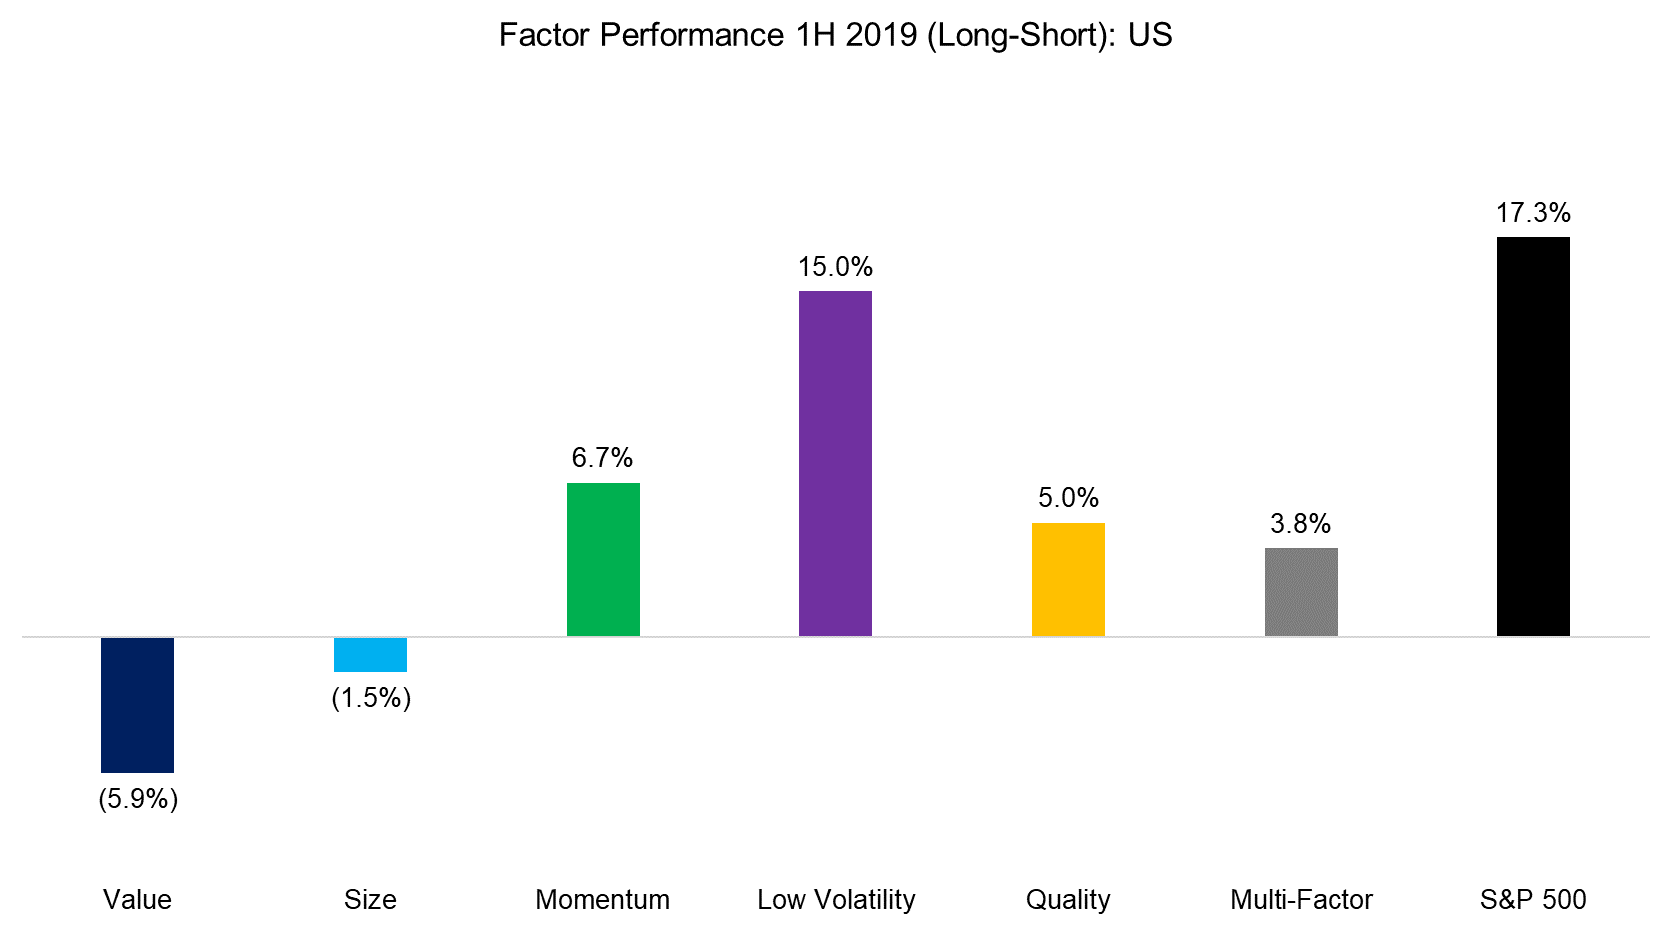 Factor Performance 1H 2019 (Long-Short) US